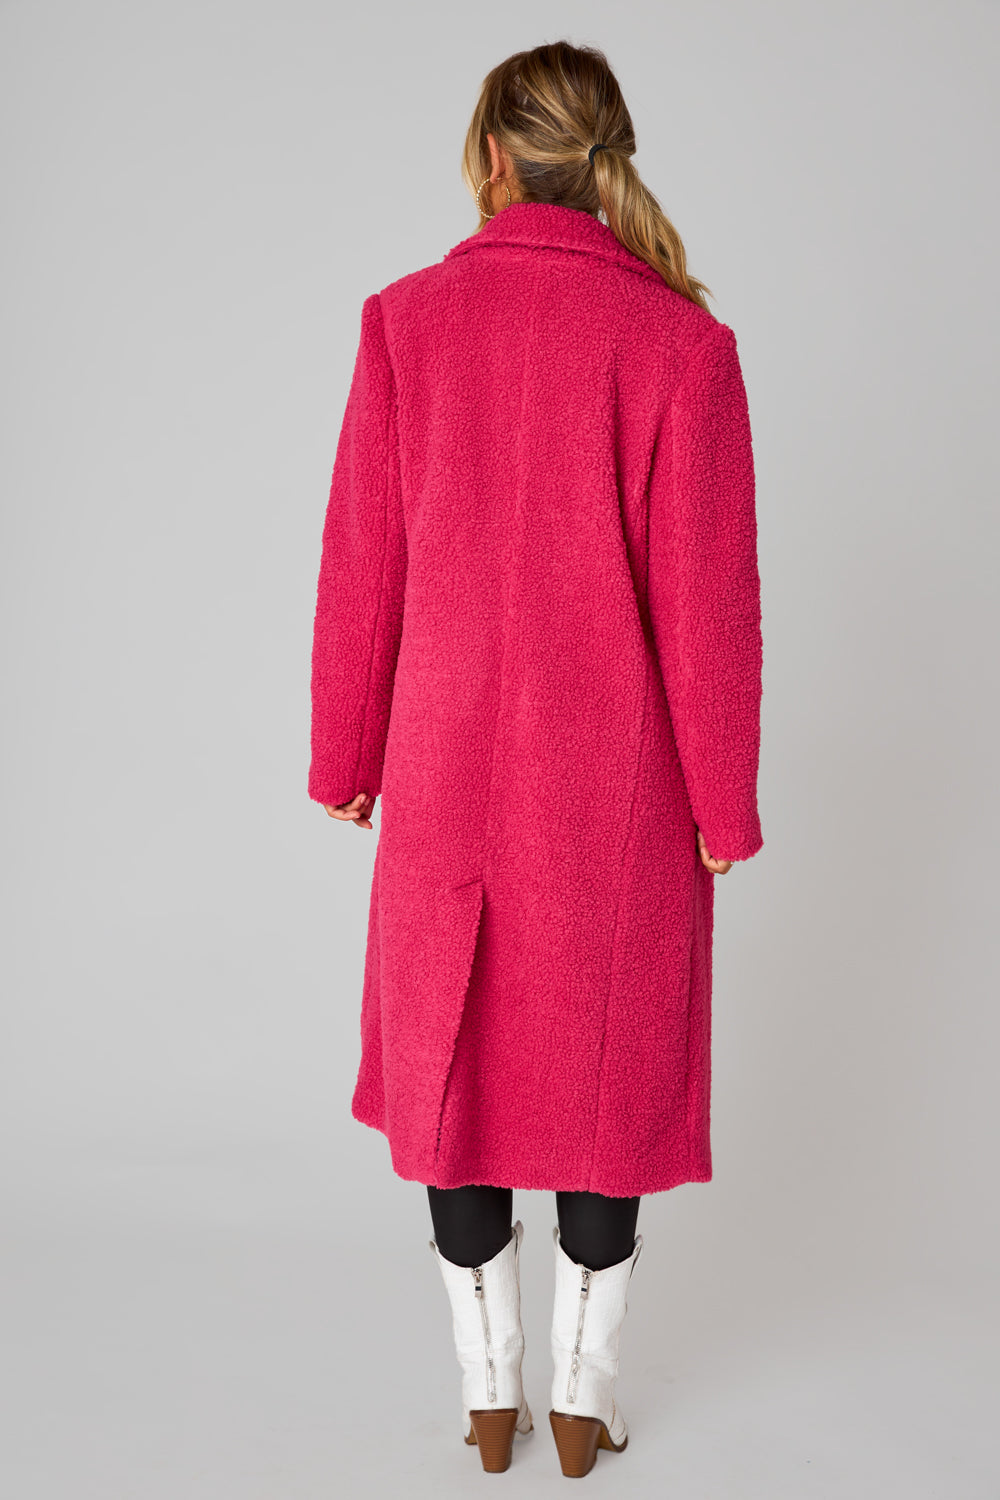 BuddyLove Noella Faux Fur Jacket - Hot Pink - L / Pink / Solids